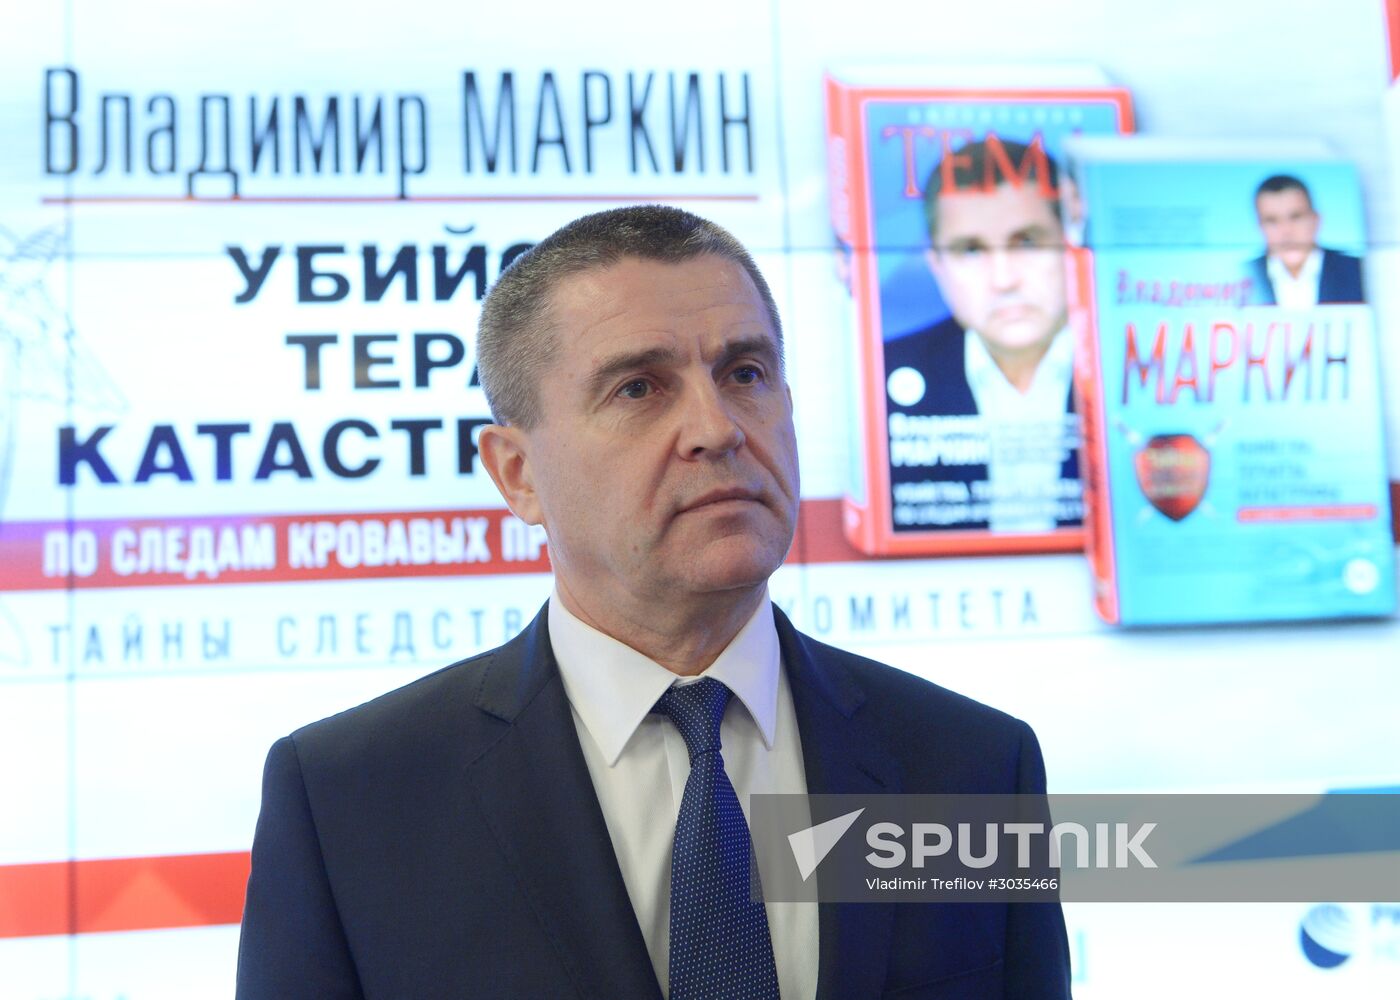 Presentation of Vladimir Markin's book "Murders, Acts ot Terror, Disasters"